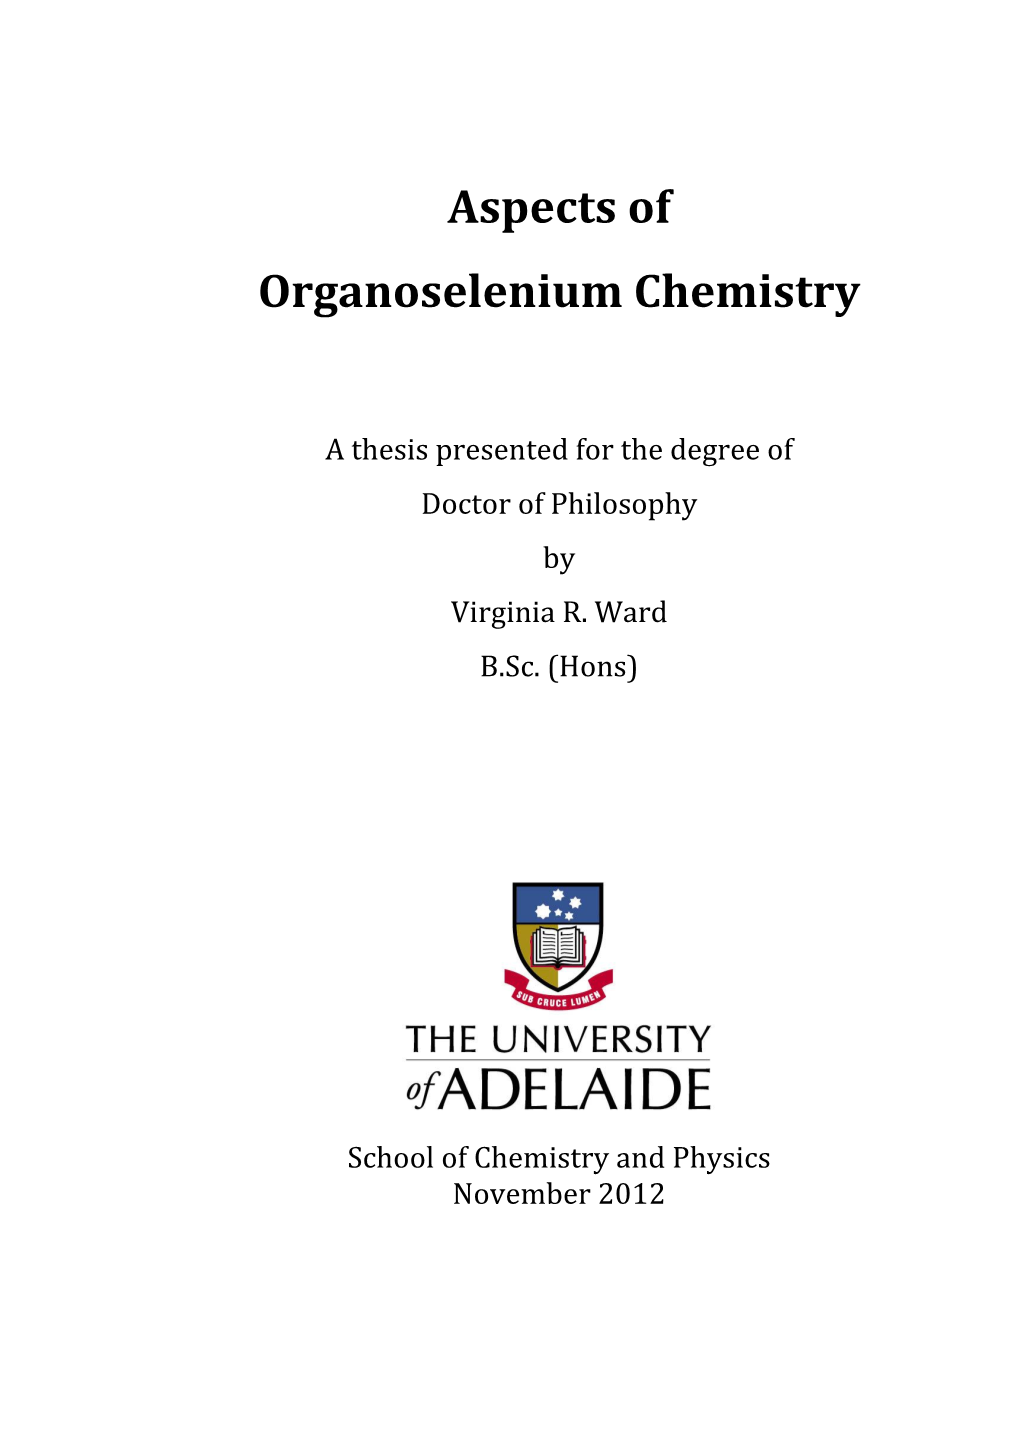 Aspects of Organoselenium Chemistry